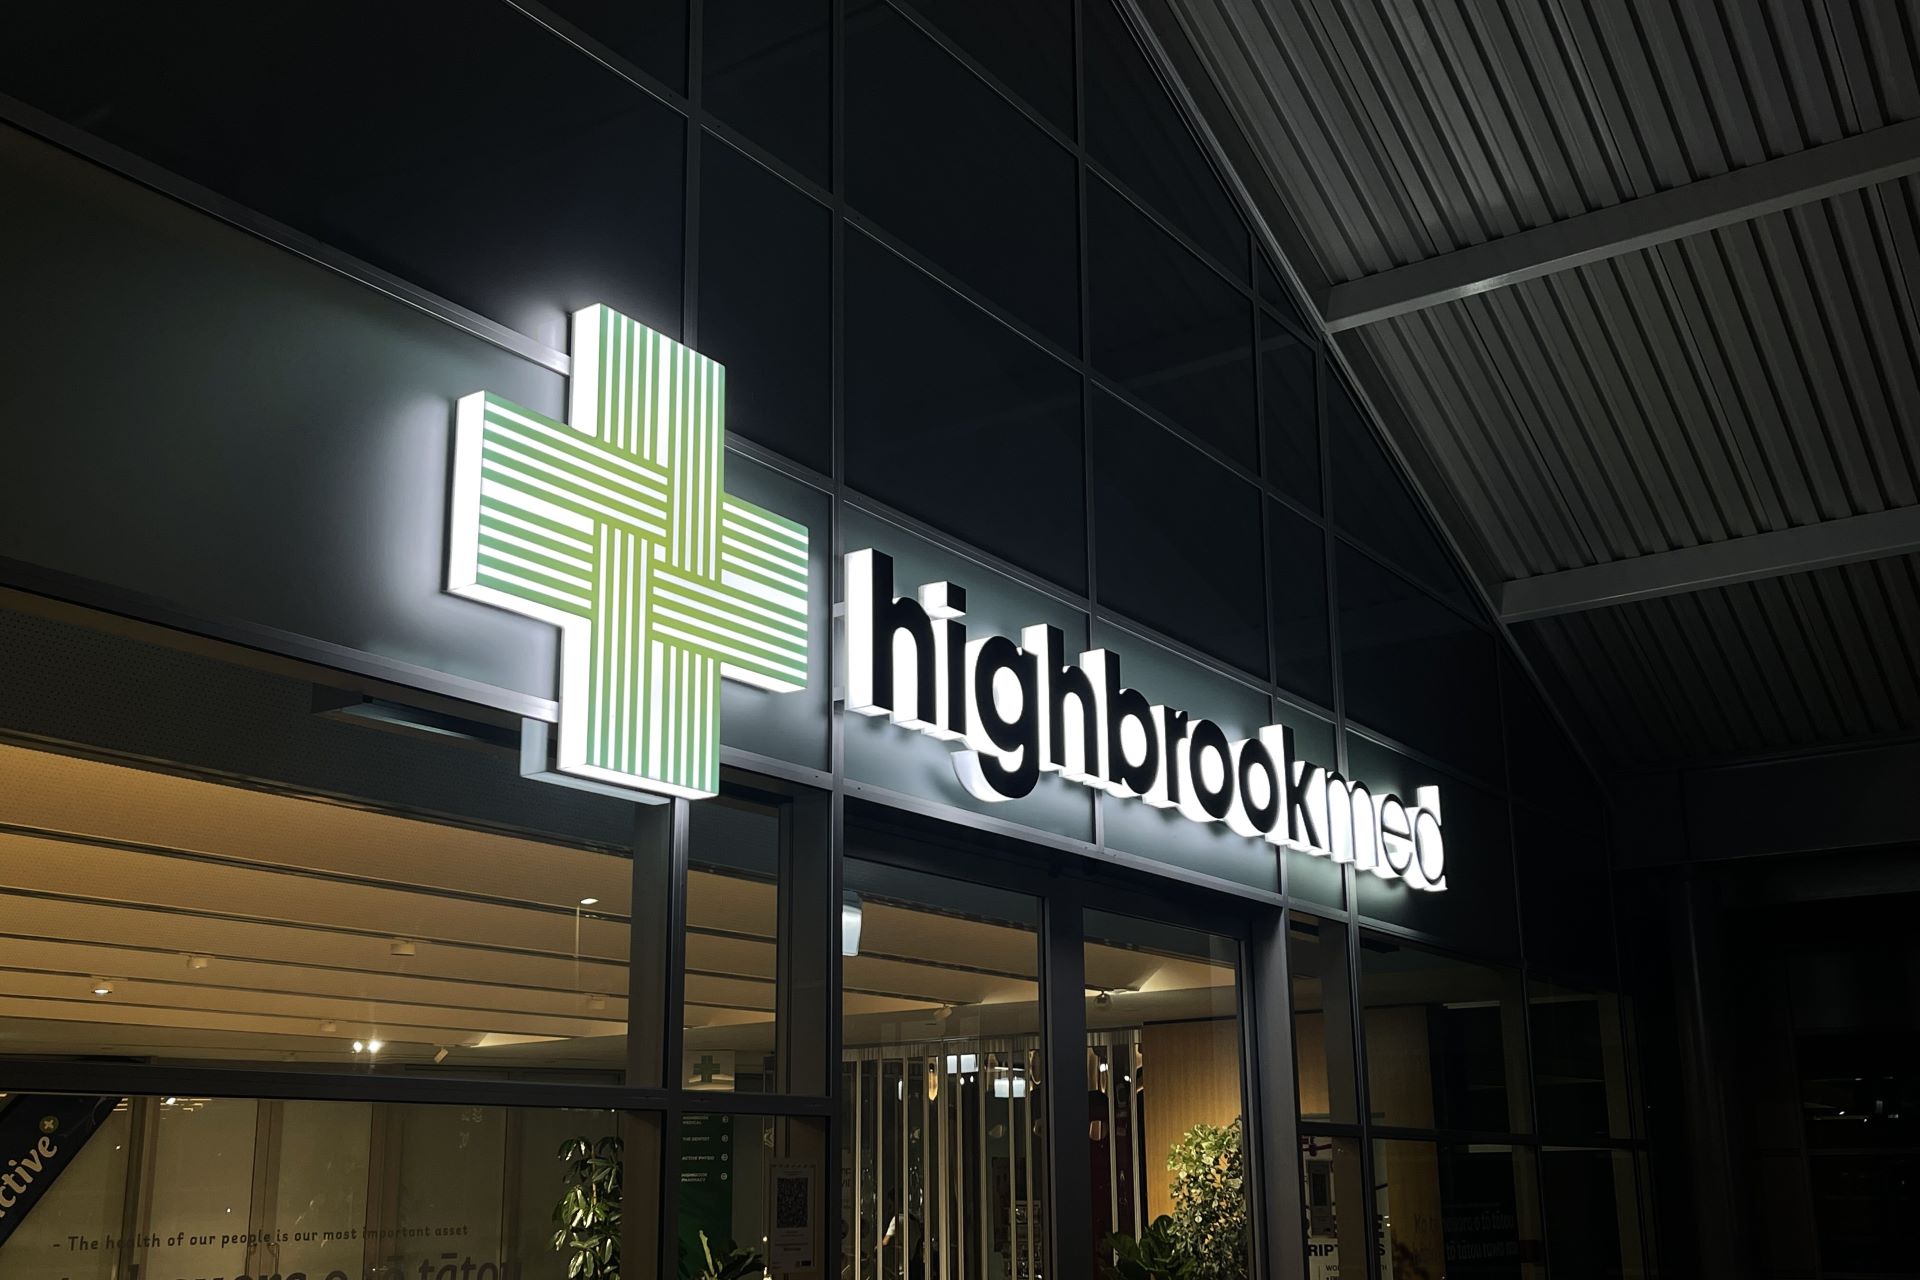 highbrook med illuminated building signage